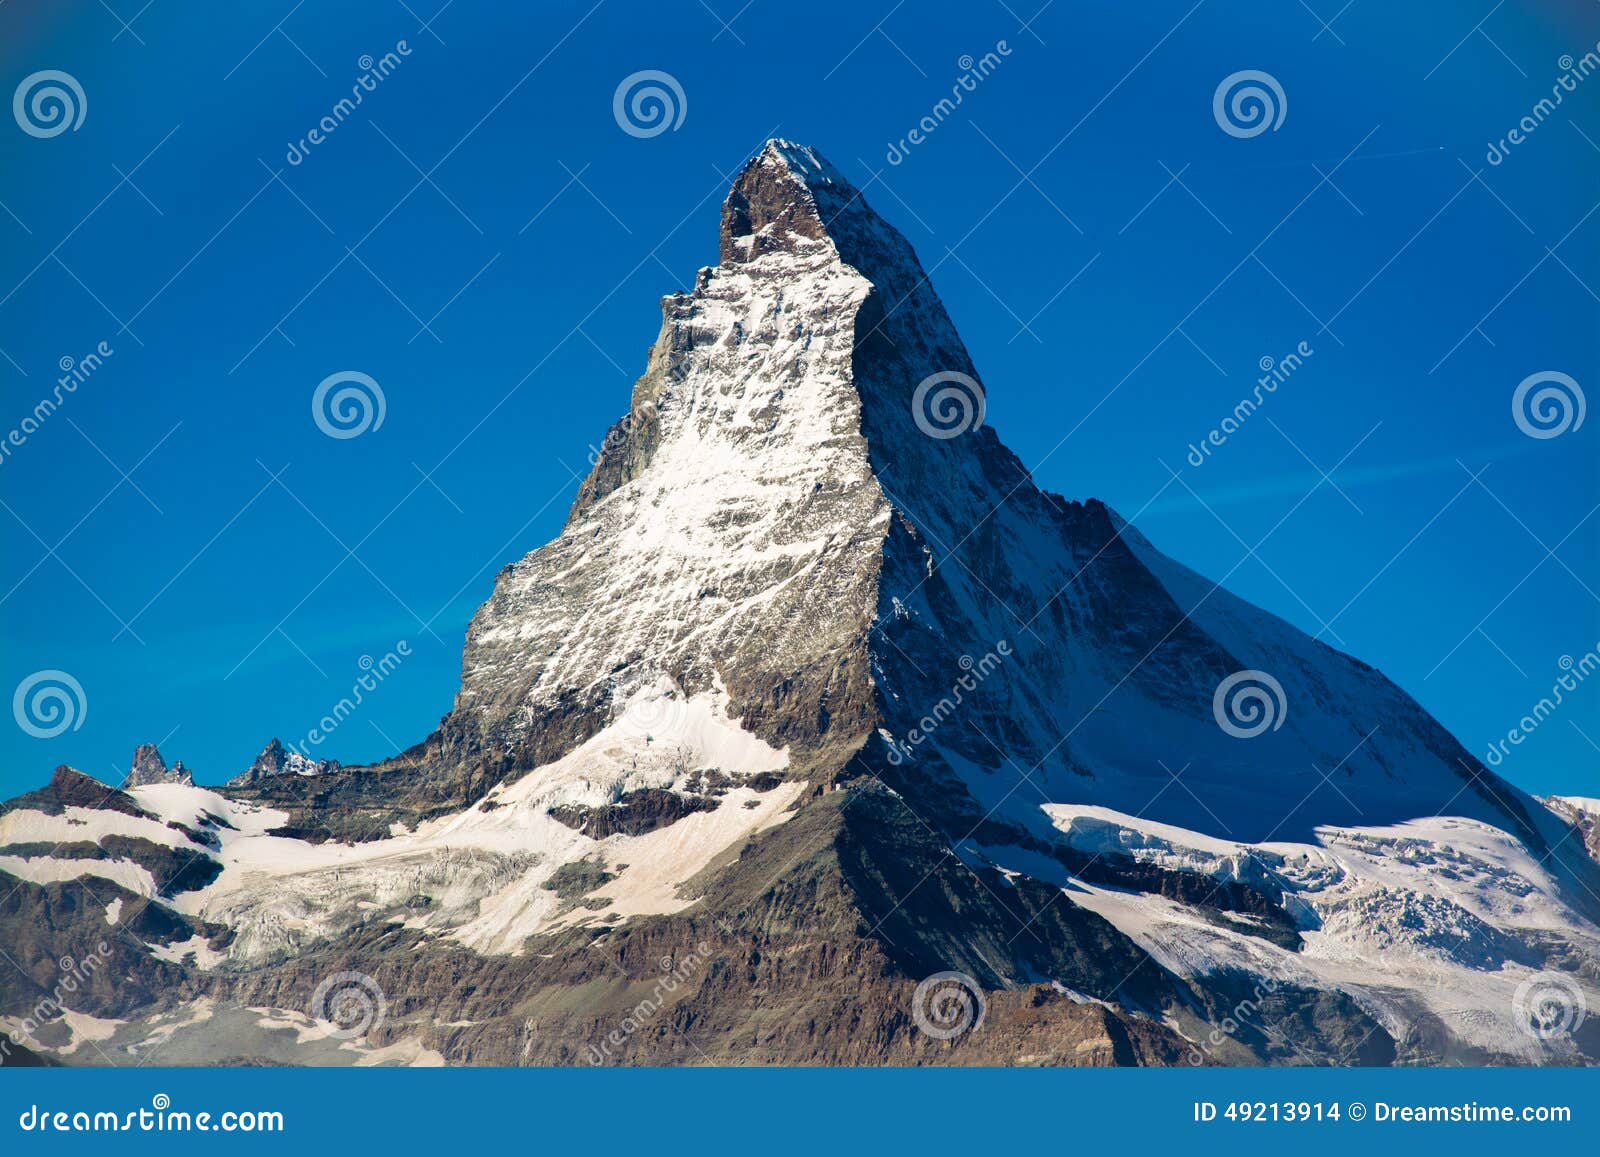 Matterhorn, Switzerland. Matterhorn at Zermatt in Switzerland